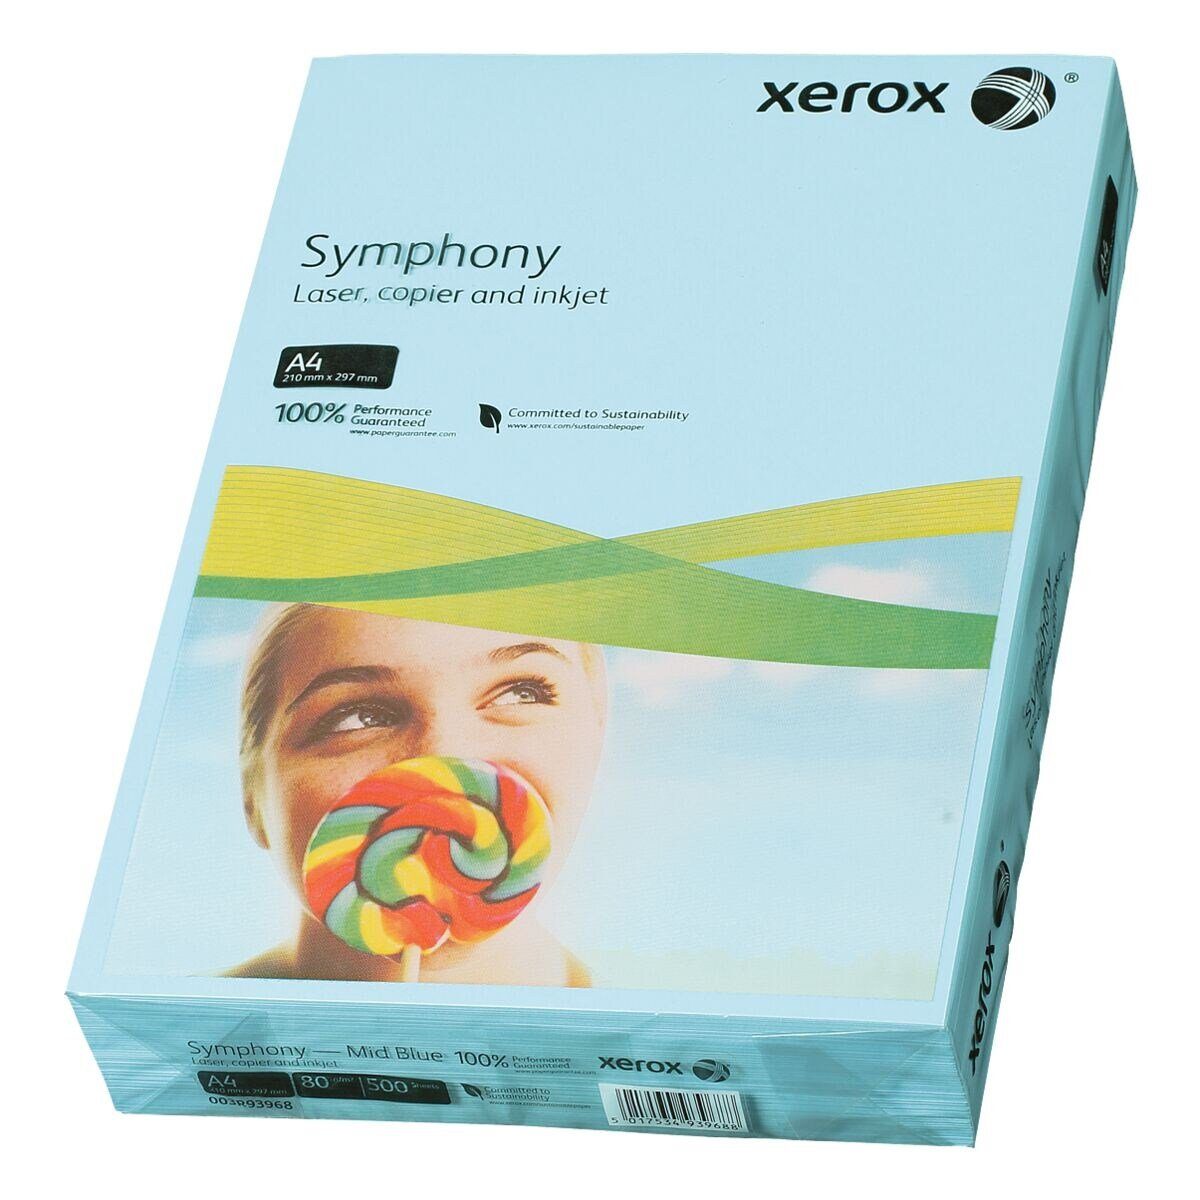 500 mittelblau Drucker- DIN 80 Kopierpapier g/m², Symphony, Trendfarben, A4, Format und Blatt Xerox